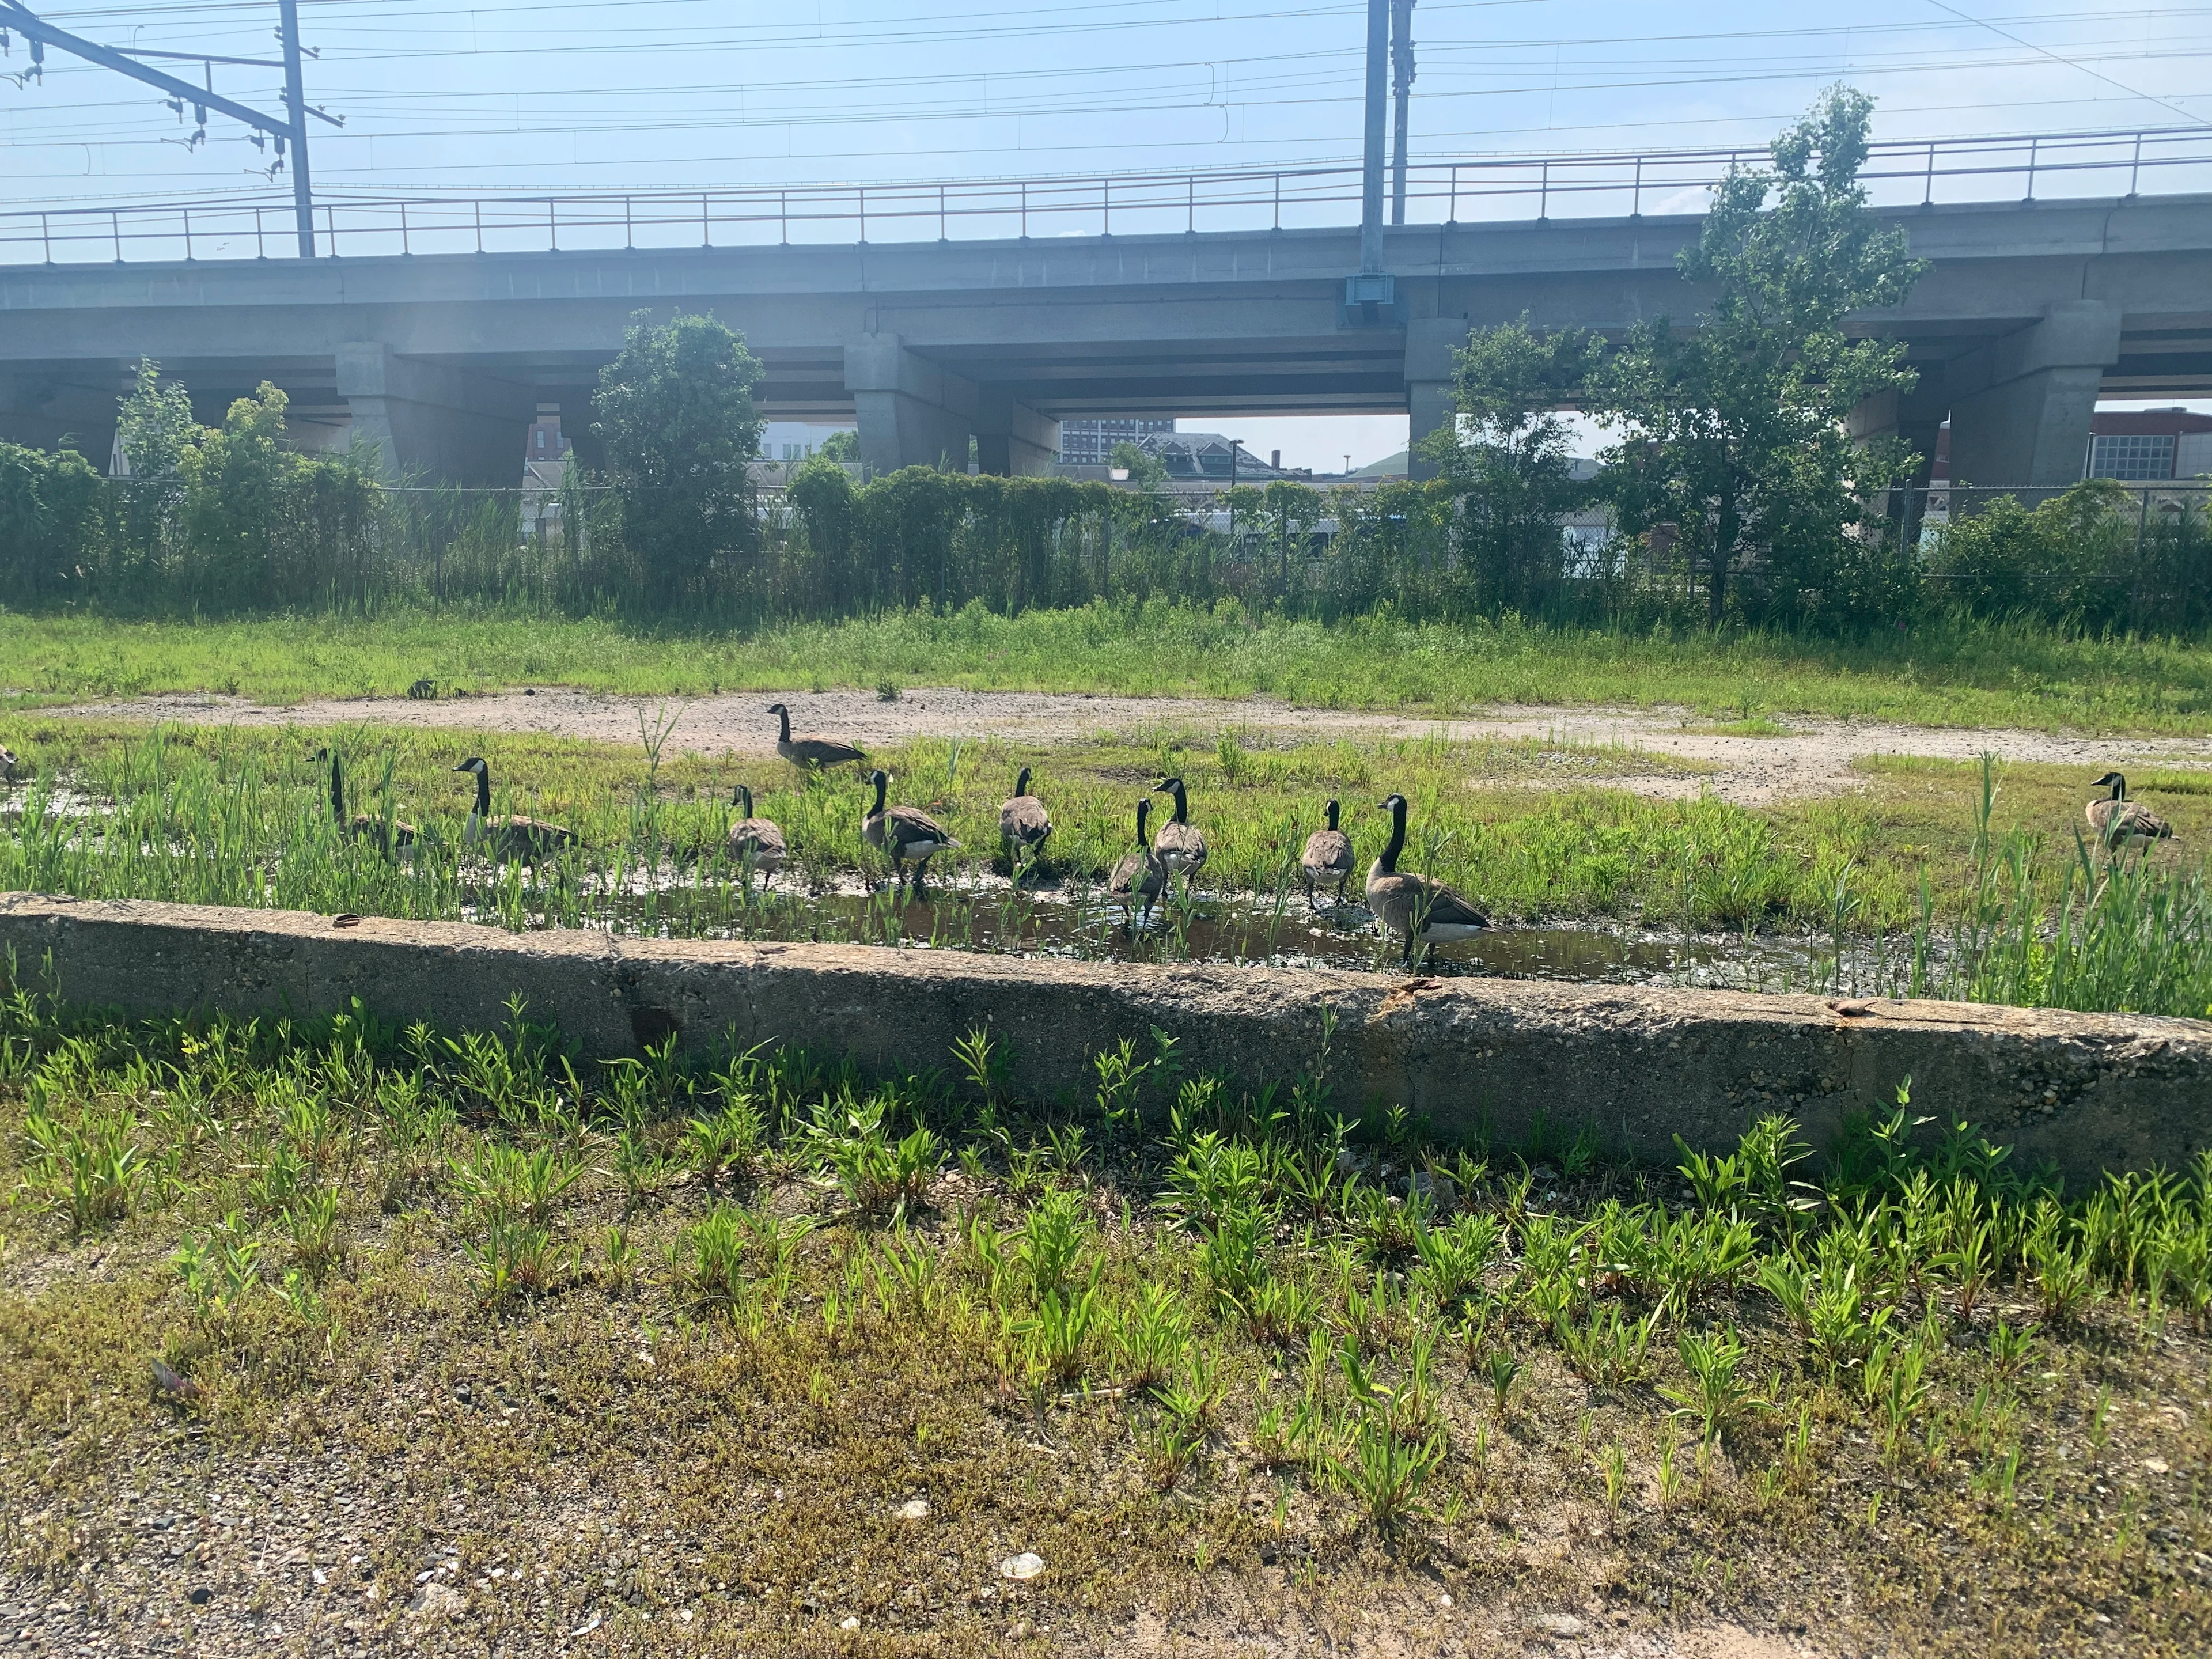 ducks standing in an open lot